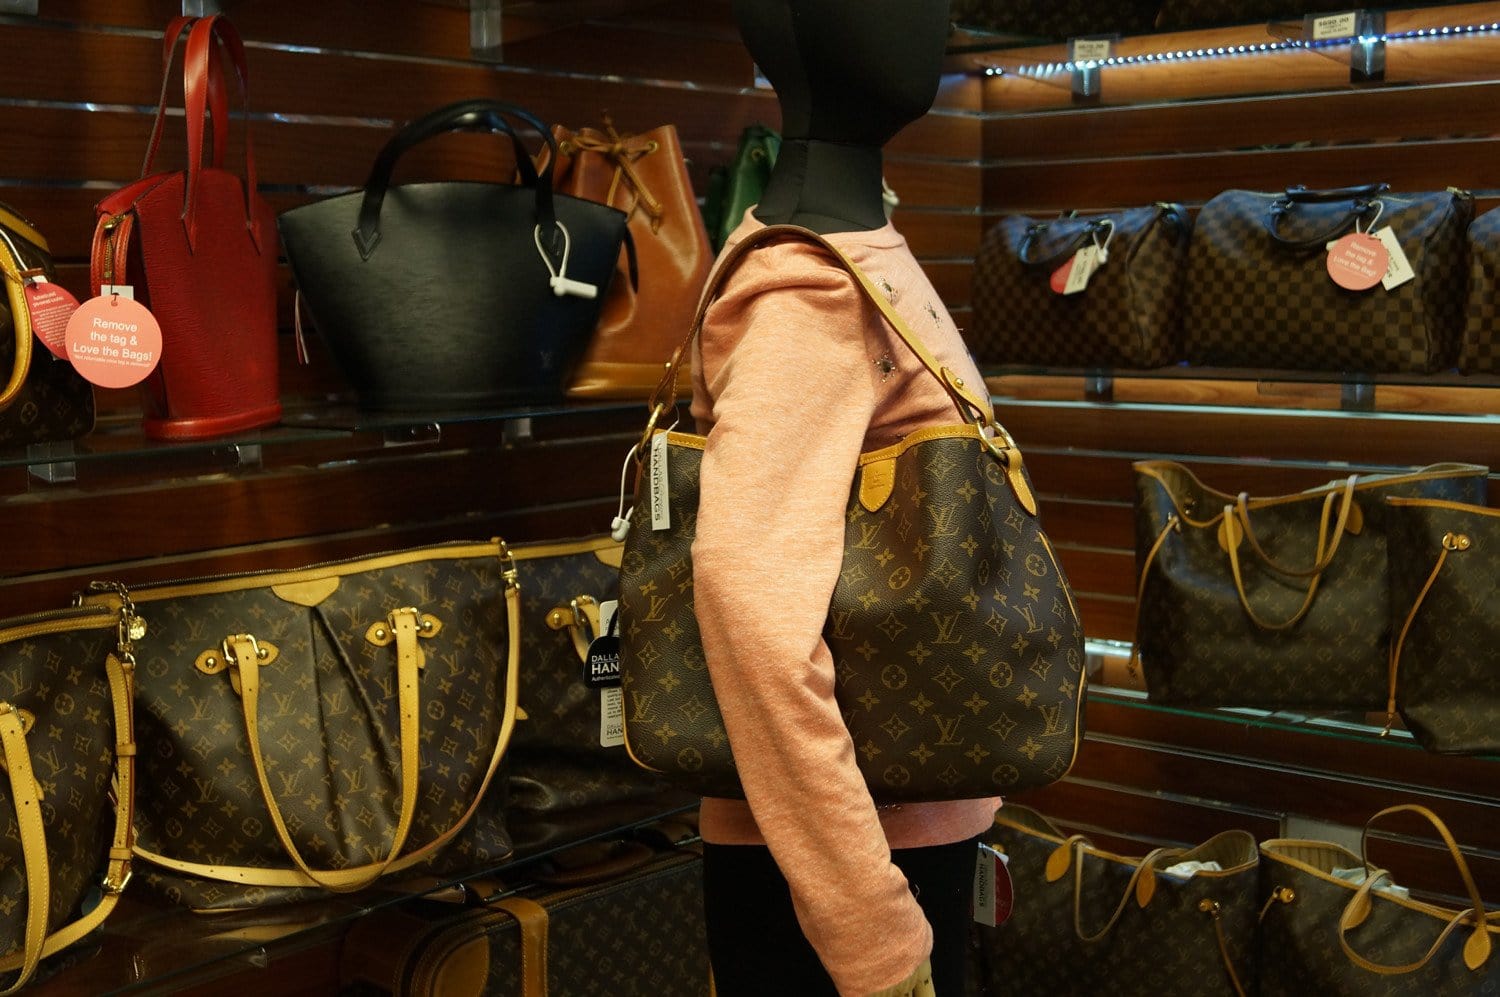 Louis Vuitton Monogram Delightful PM Shoulder Bag - A World Of Goods For  You, LLC